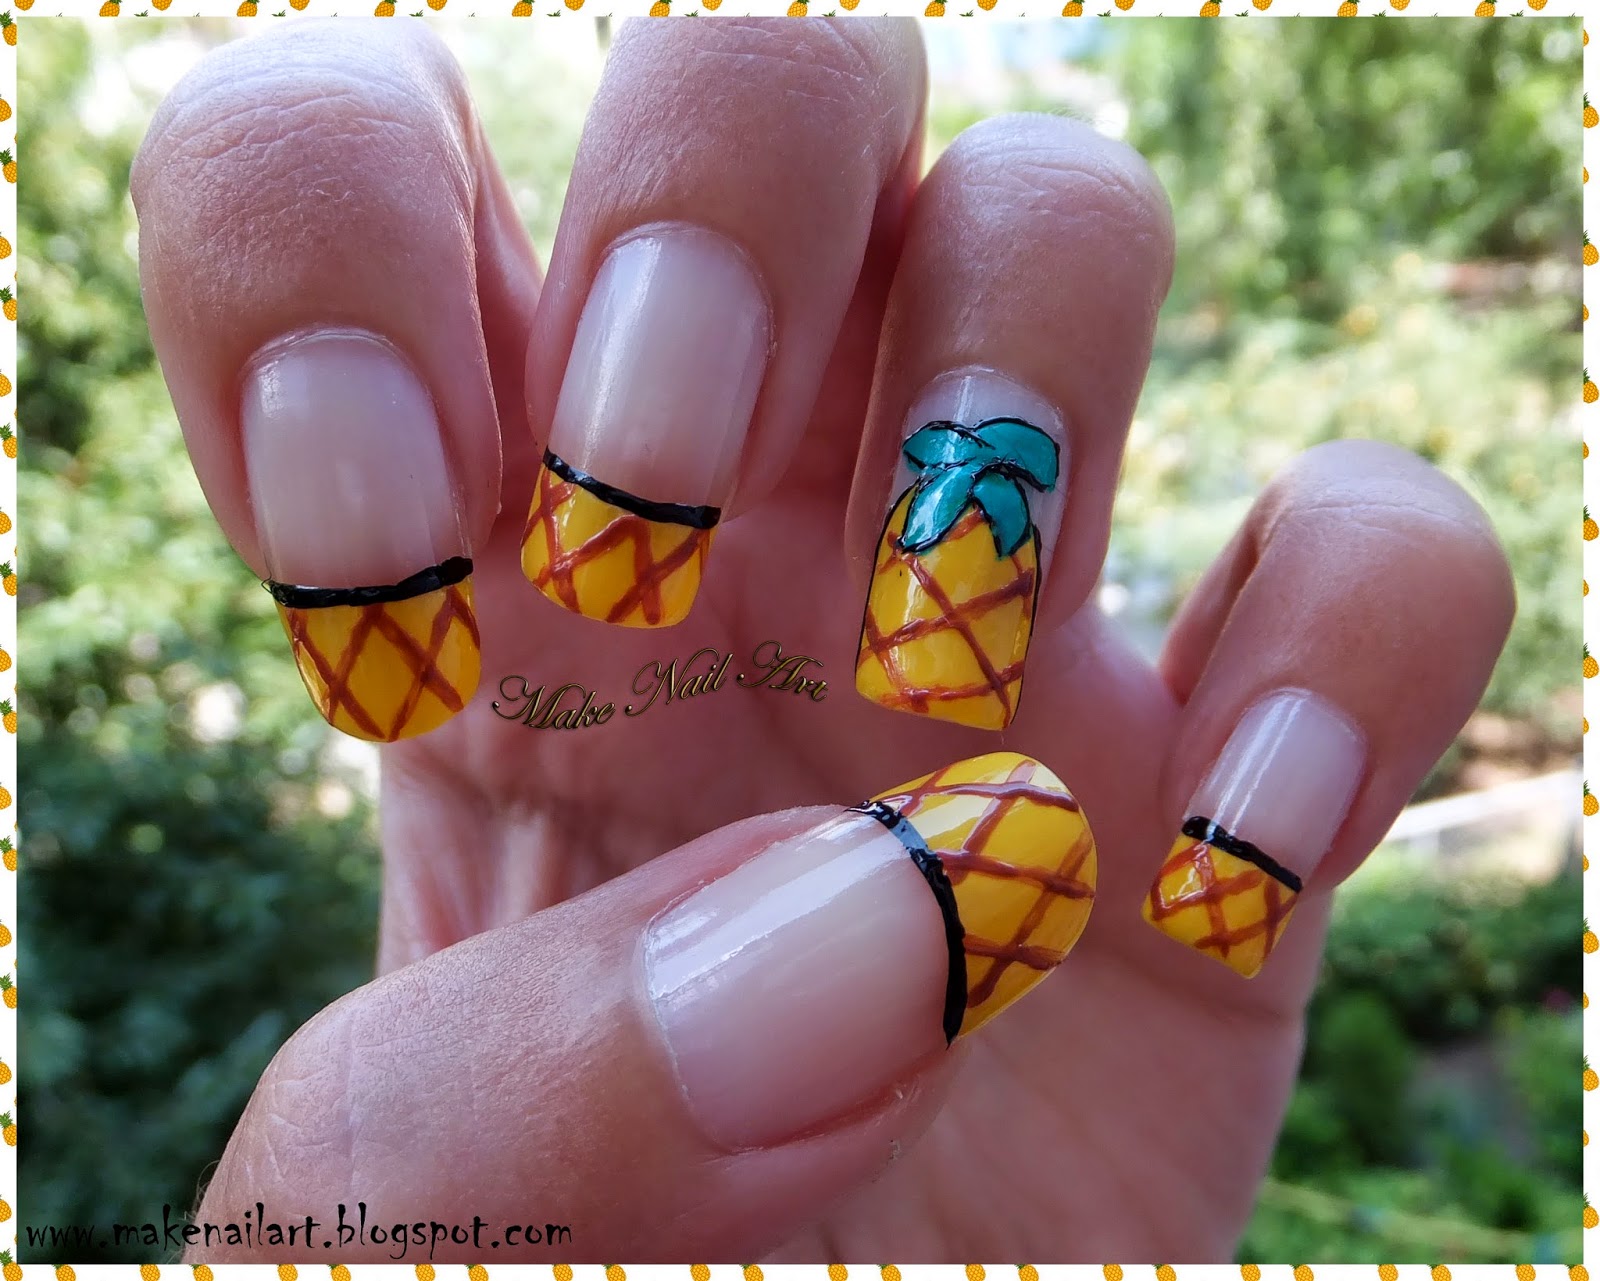 5. Pineapple Nail Art Wraps - wide 7